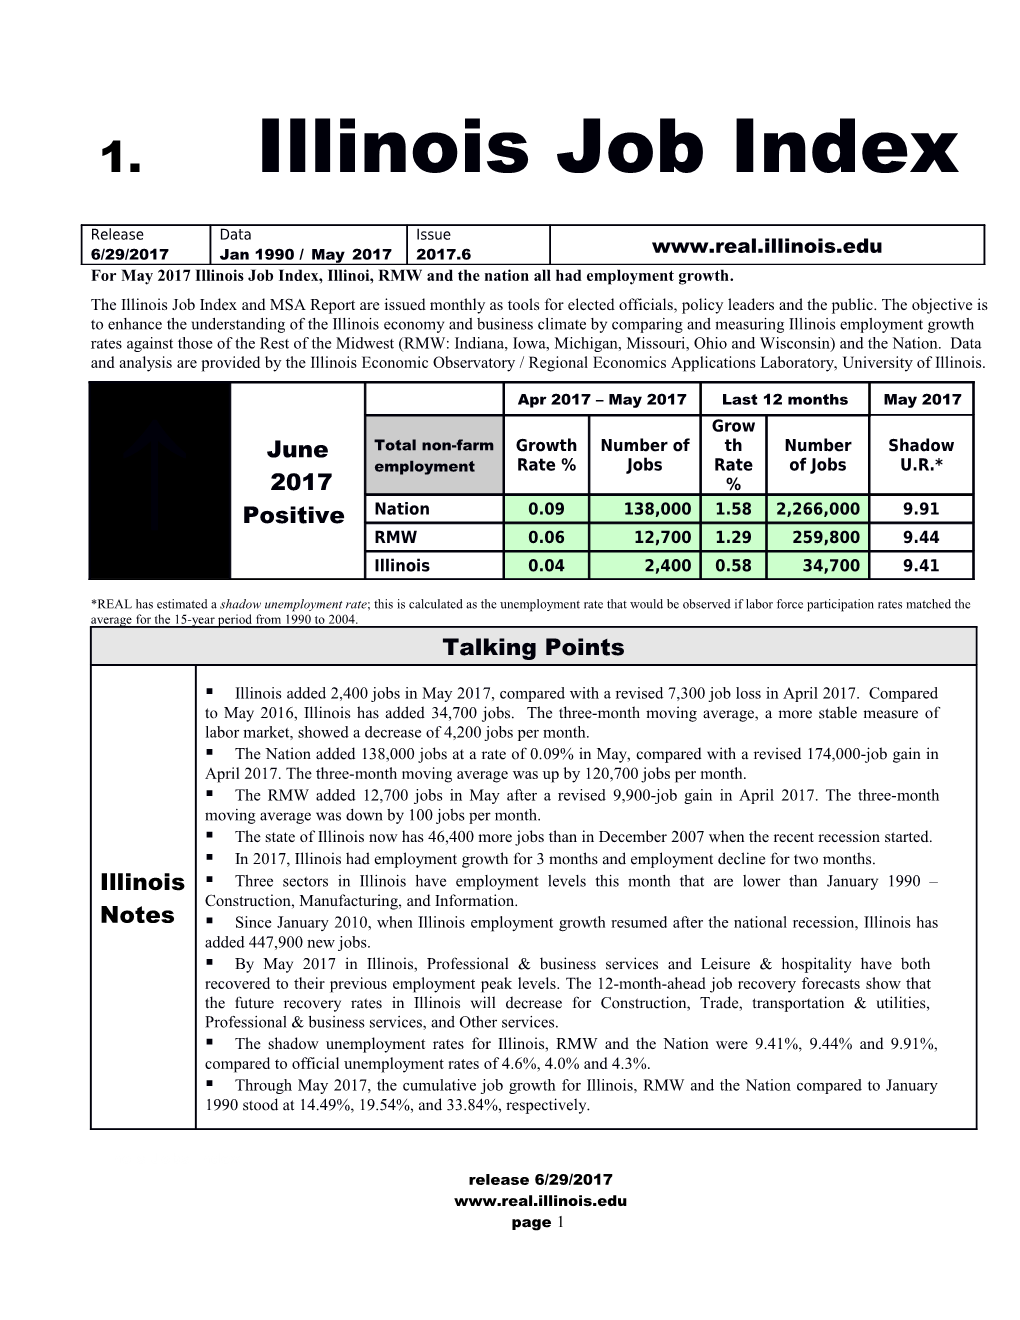 Formay 2017Illinois Job Index, Illinoi, RMW and the Nation Allhad Employmentgrowth